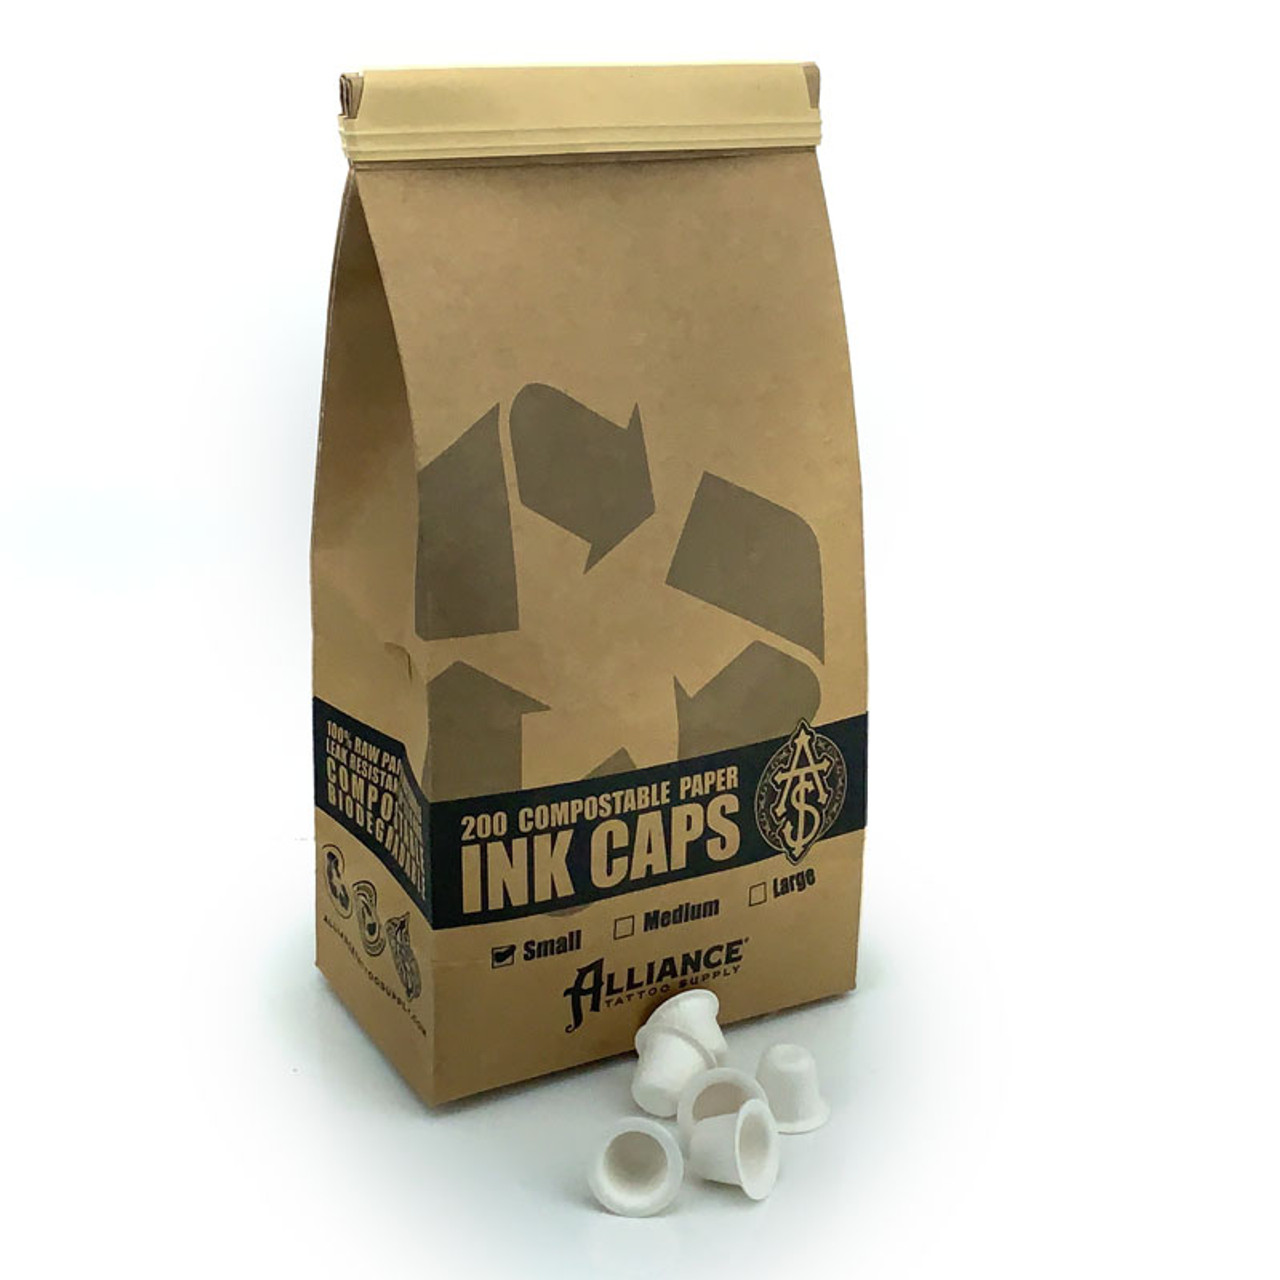 Biodegradable Ink Caps